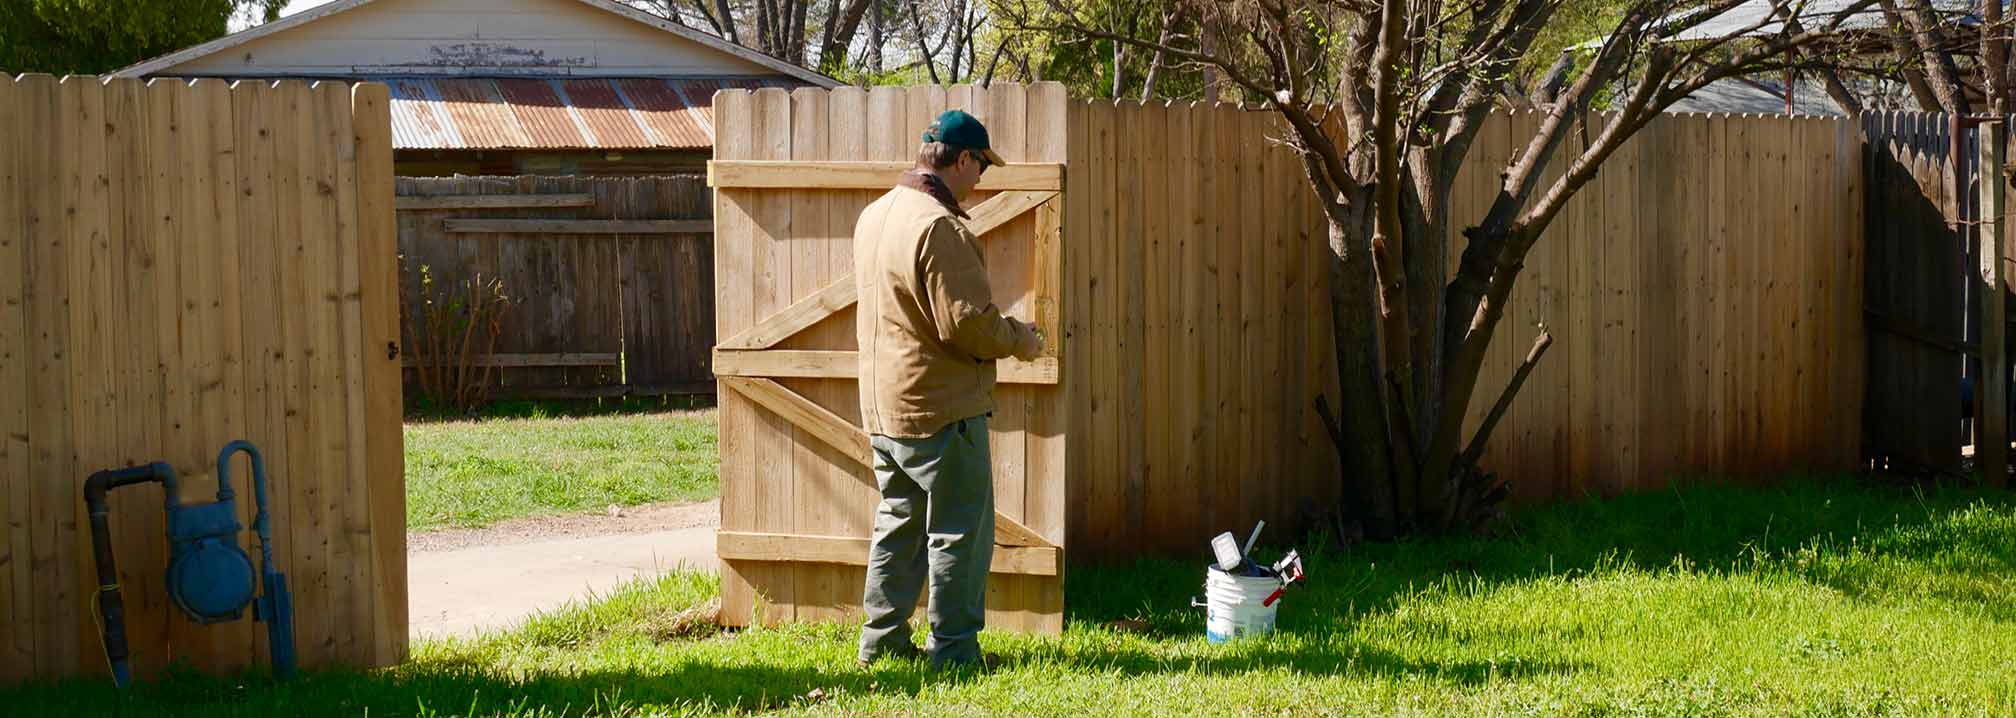 man repairing gate latch on cedar fence